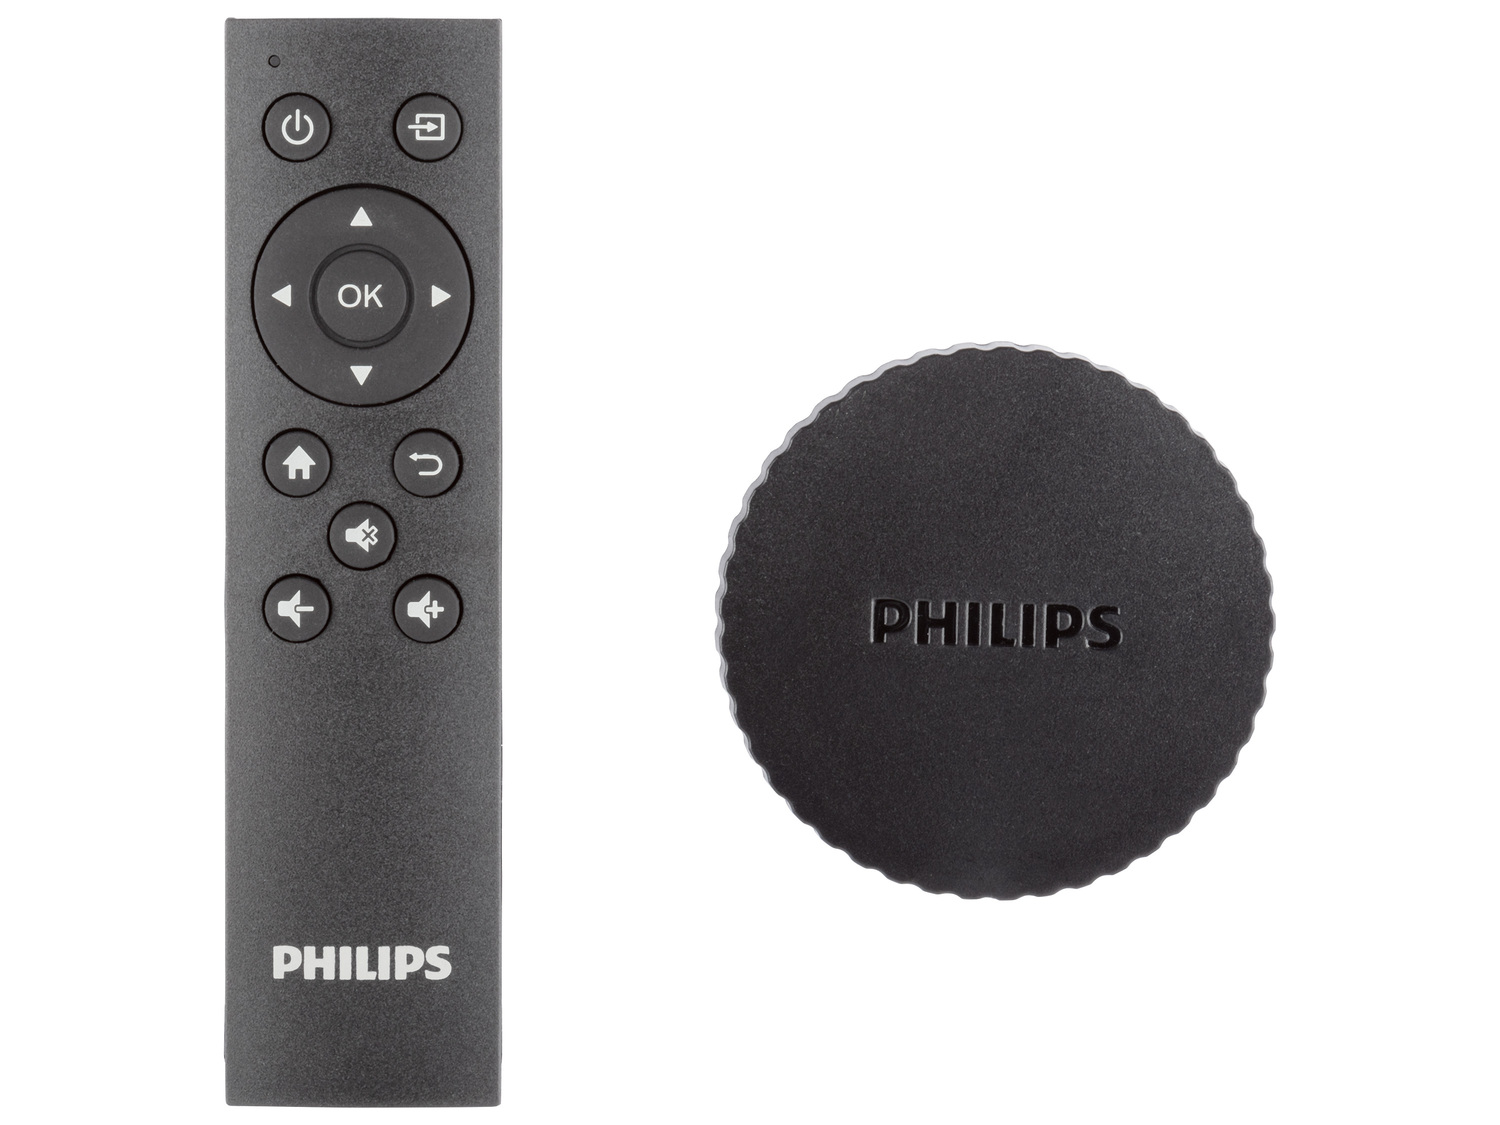 Projektor LED Philips NeoPix Easy Ace , cena 1111,00 PLN 
- 31,5 x 23,5 x 12 cm
- ...